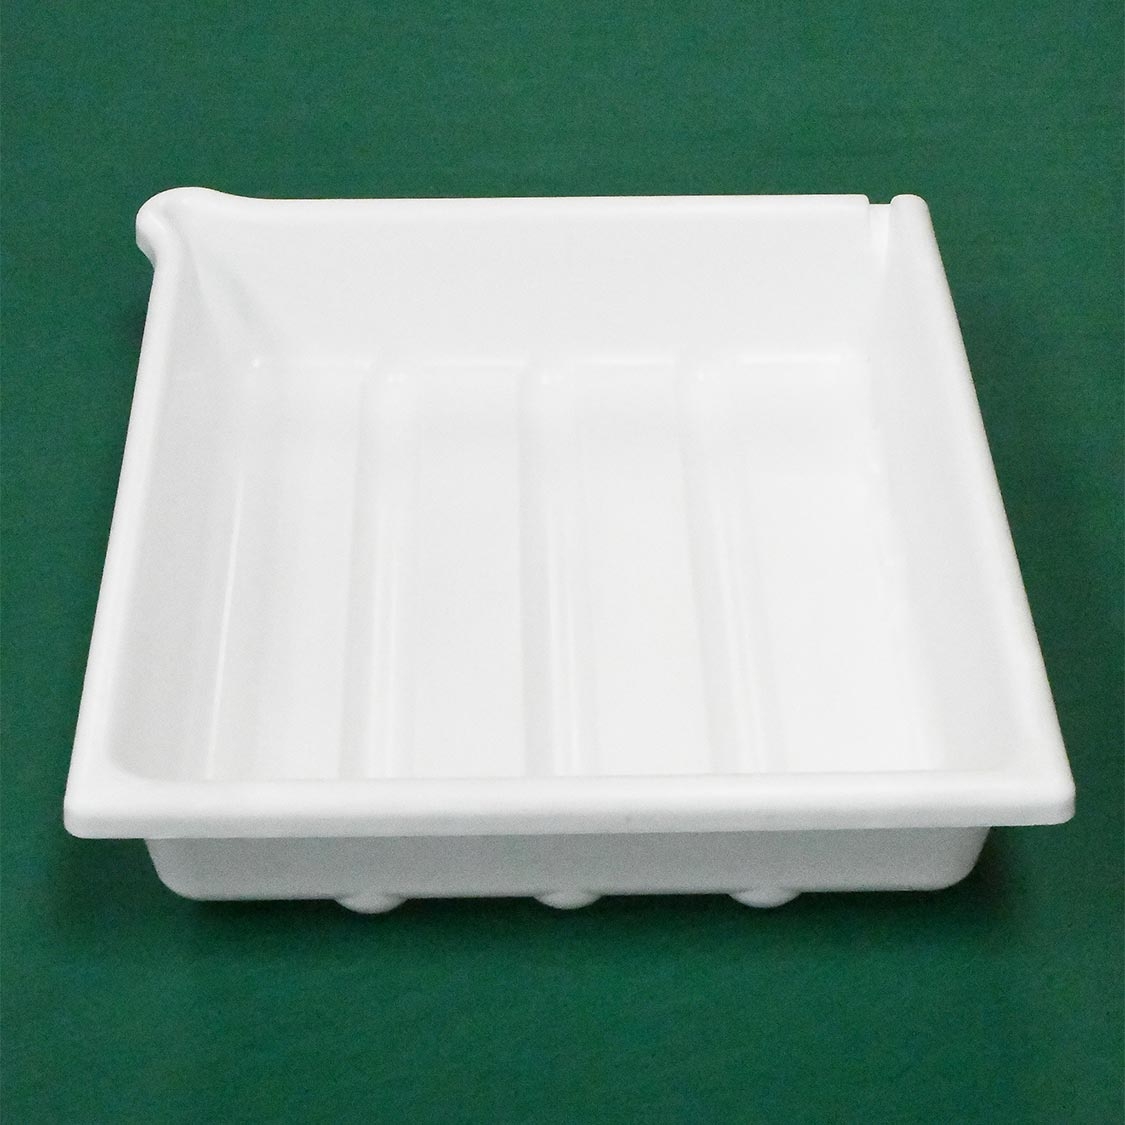 Paterson 11x14-inch Tray (white)